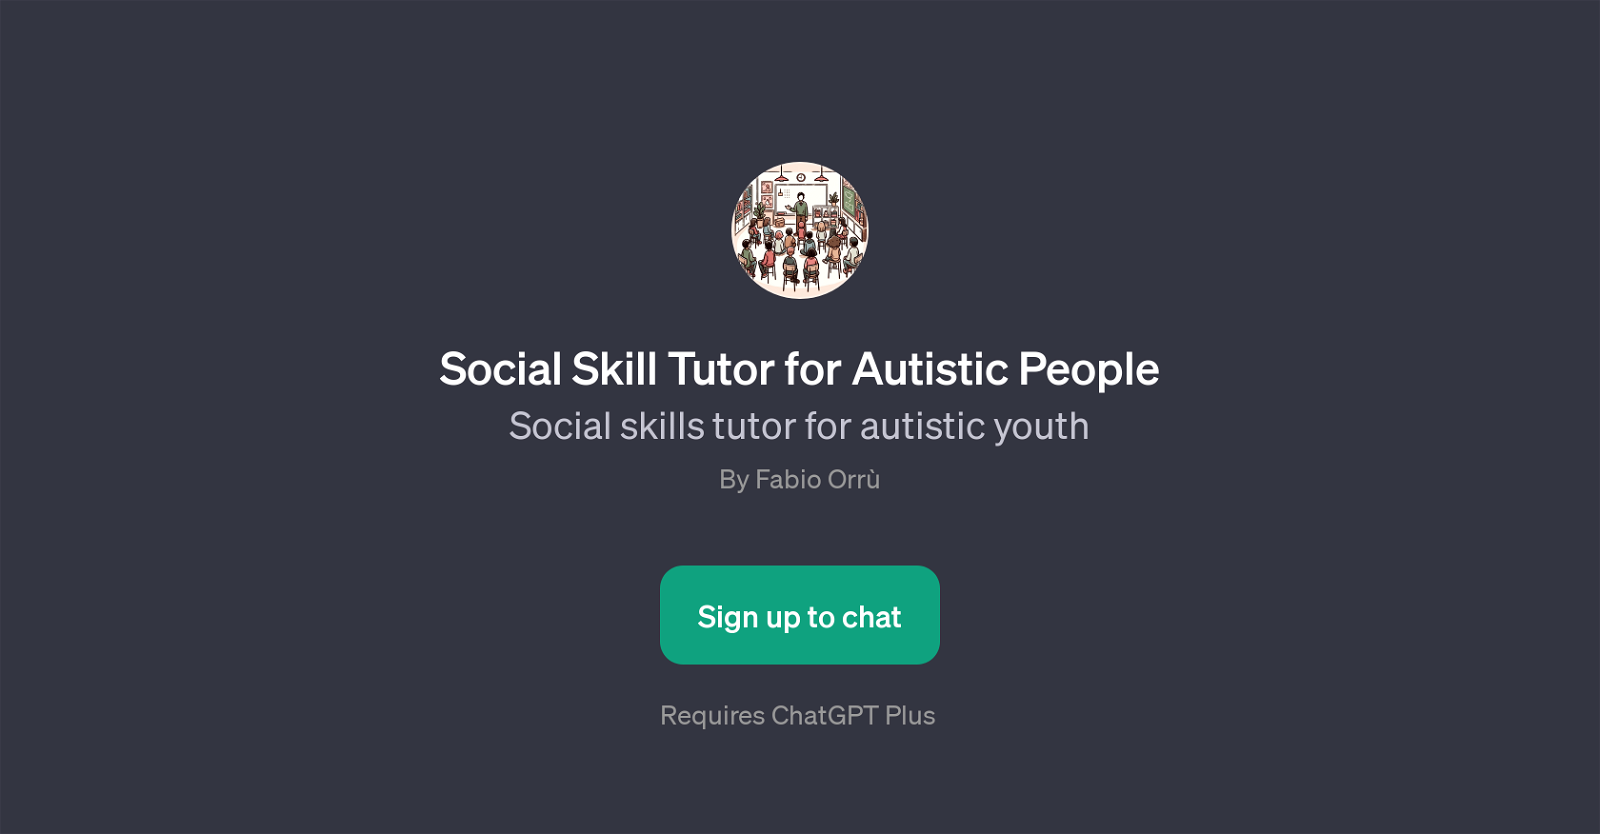 Social Skill Tutor for Autistic People website